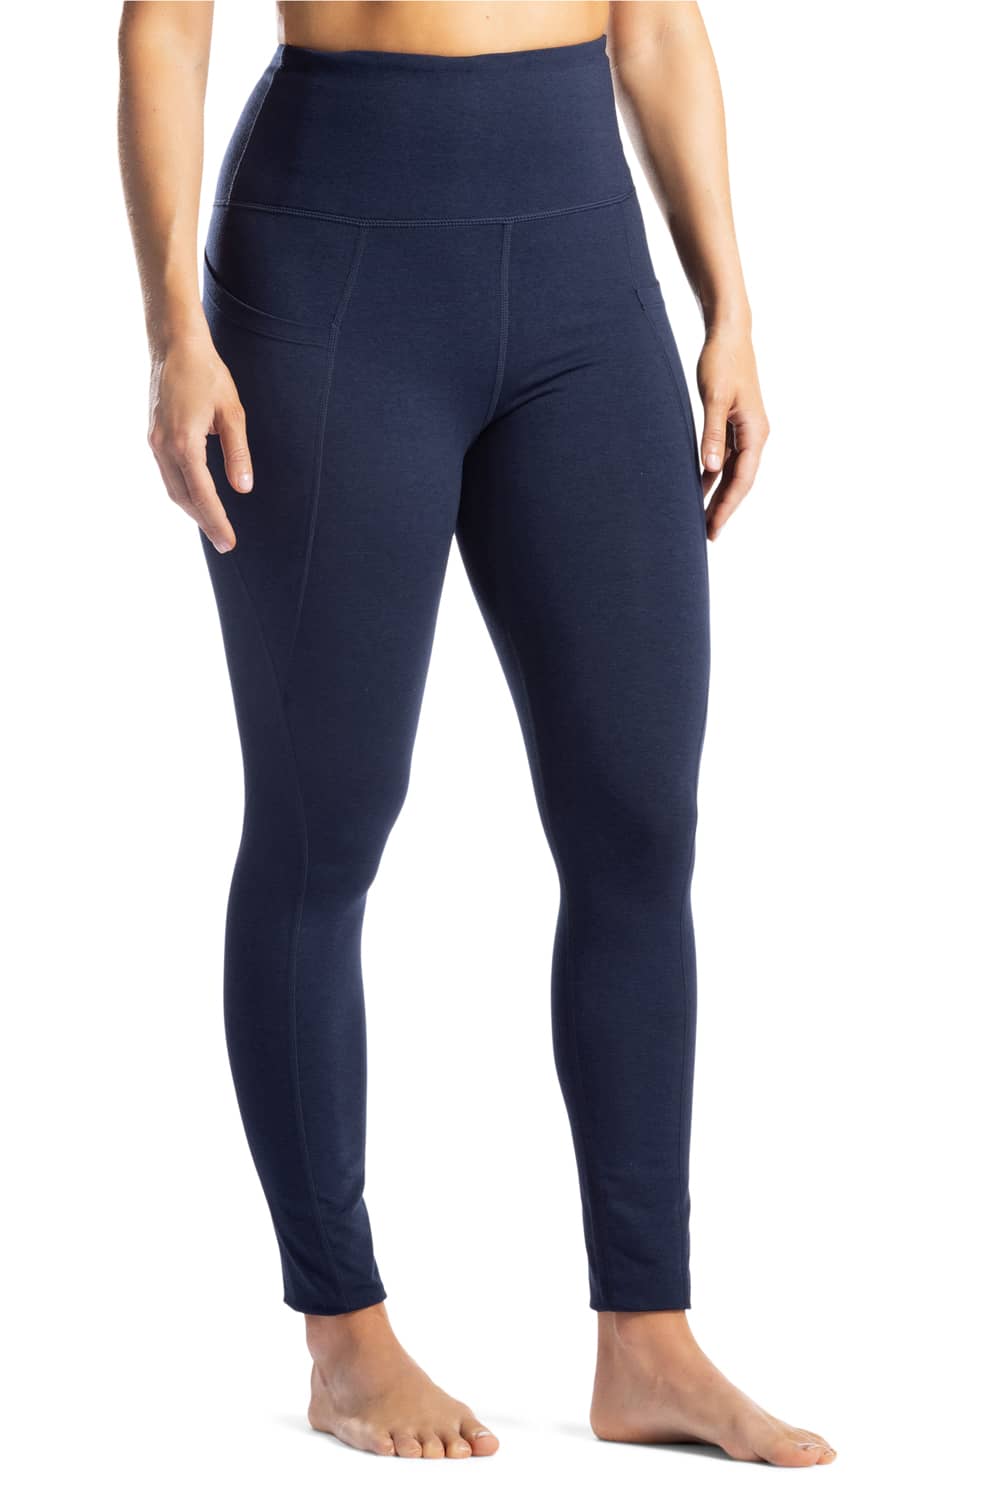 Buy BODYACTIVE Women's Polyester Spandex Navy Capri Yoga Pants